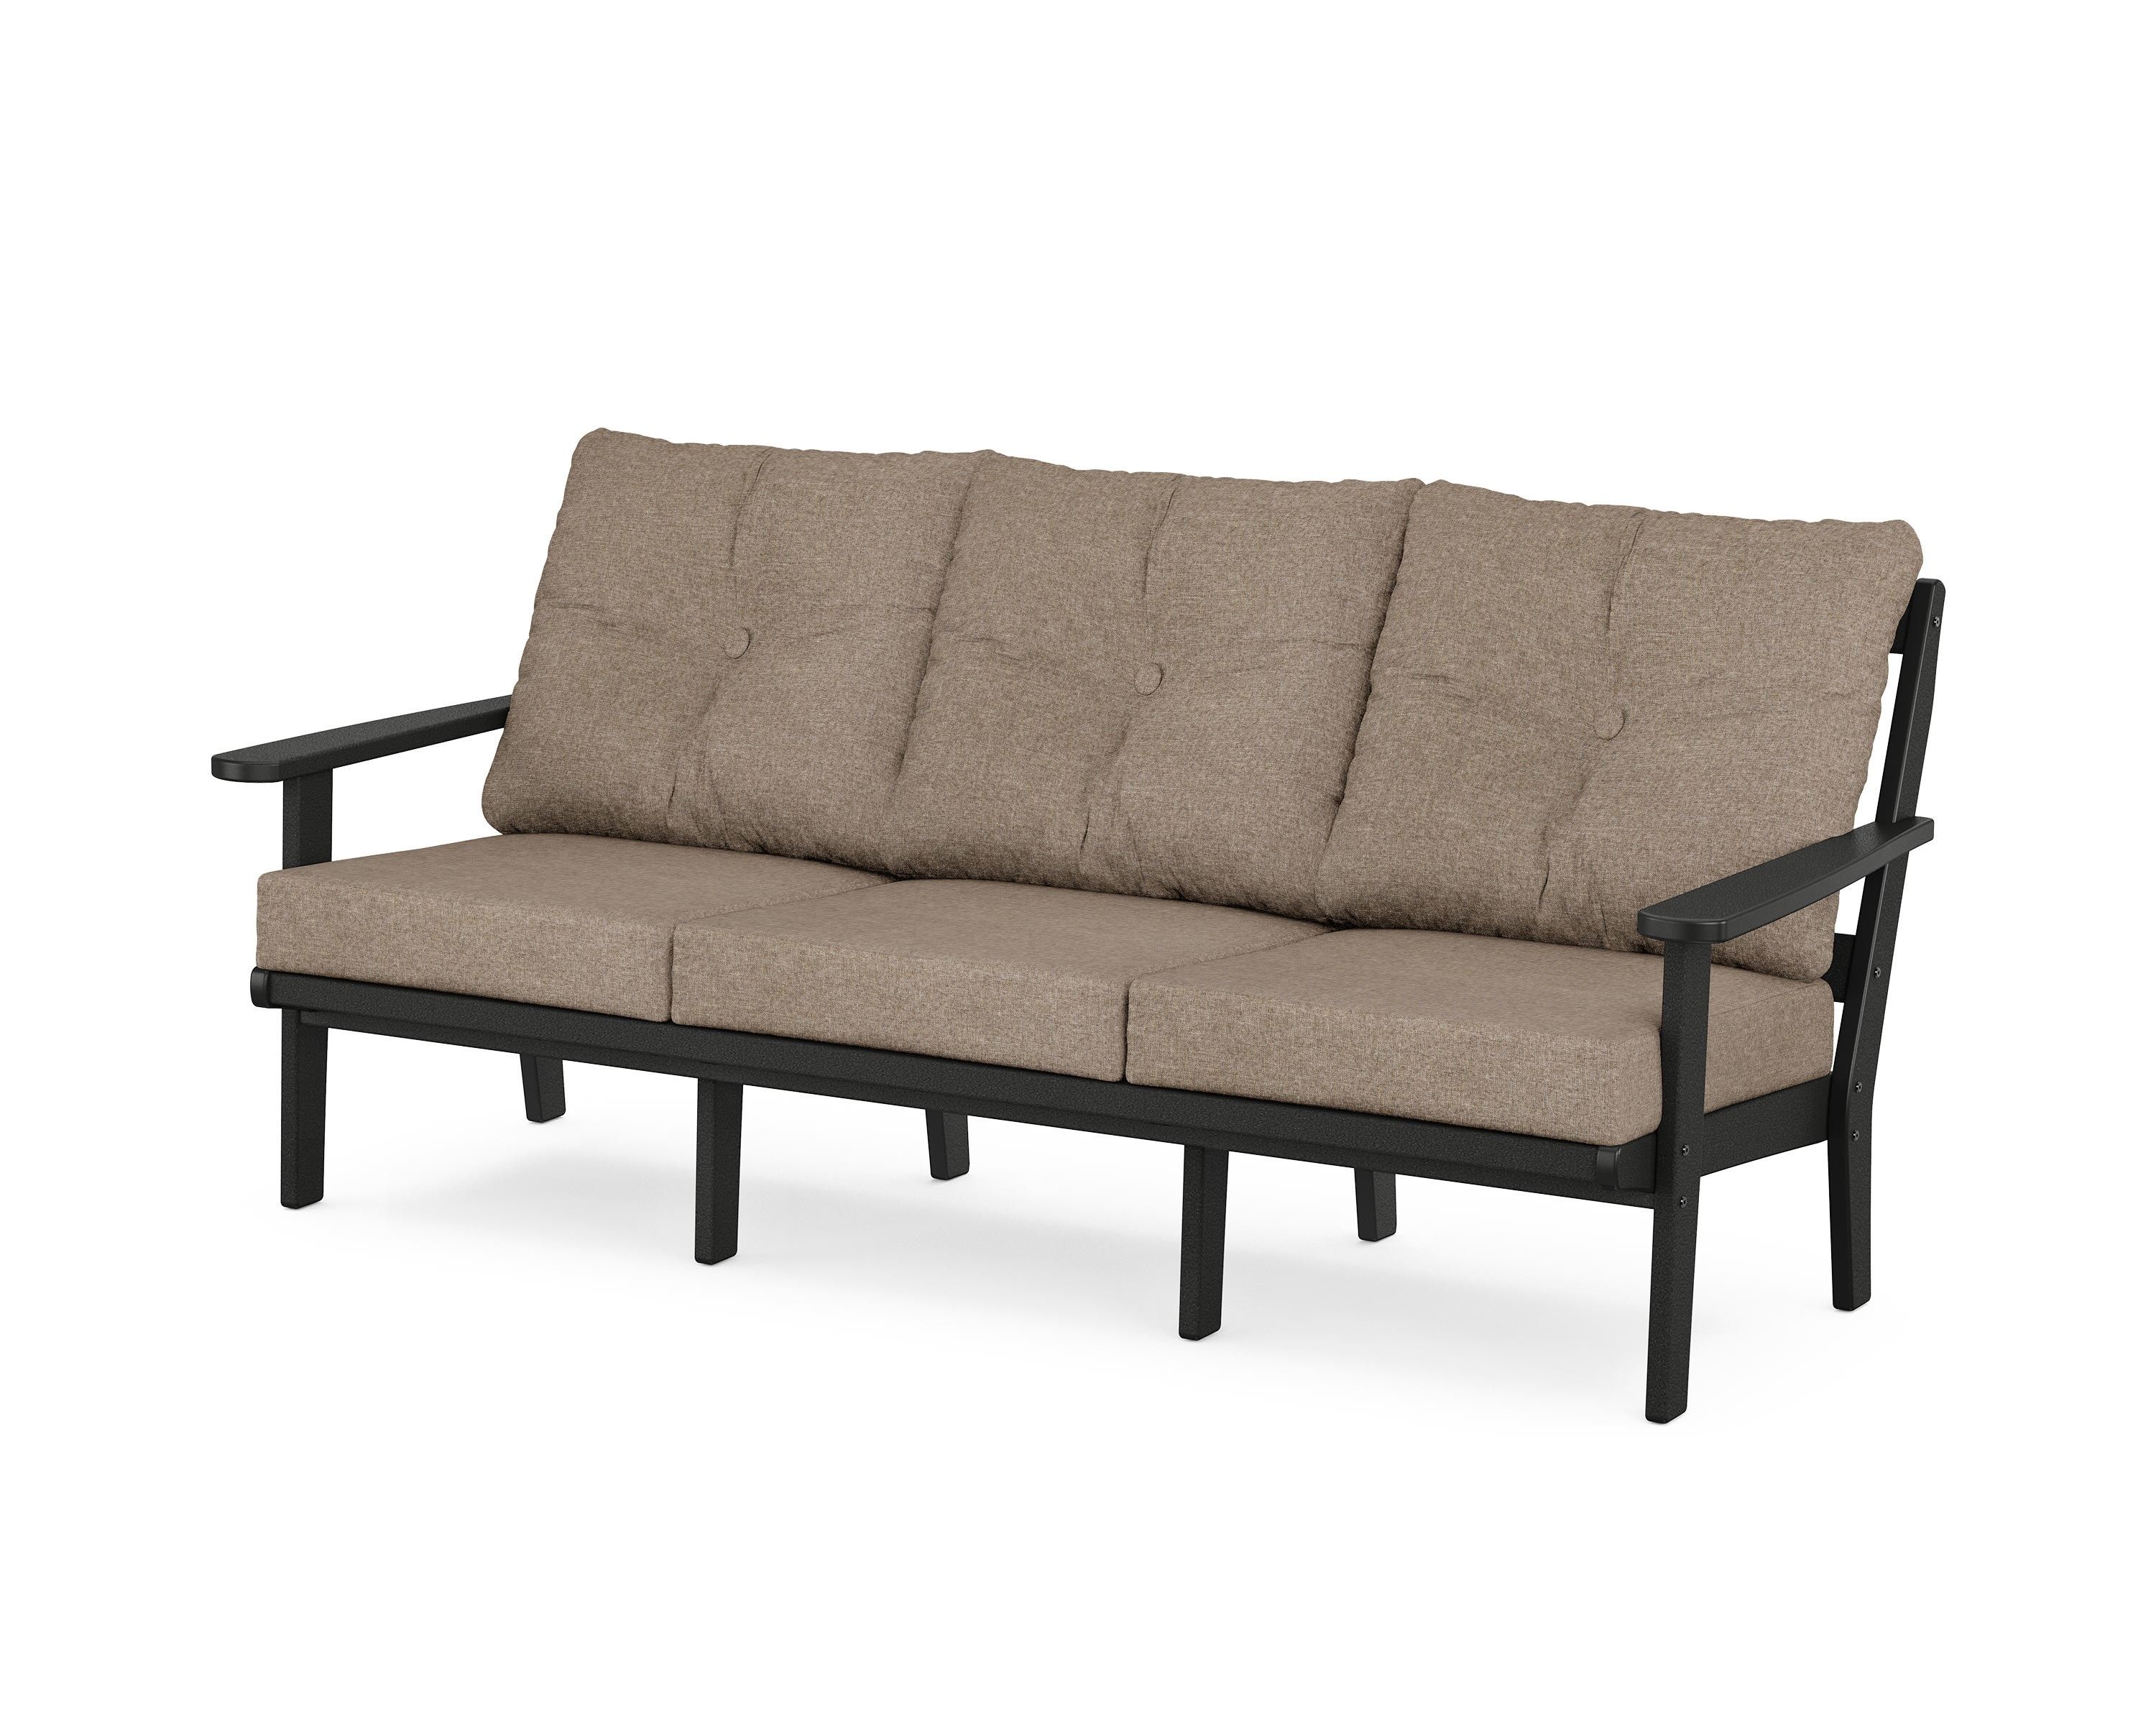 Trex Outdoor Furniture Cape Cod Deep Seating Sofa